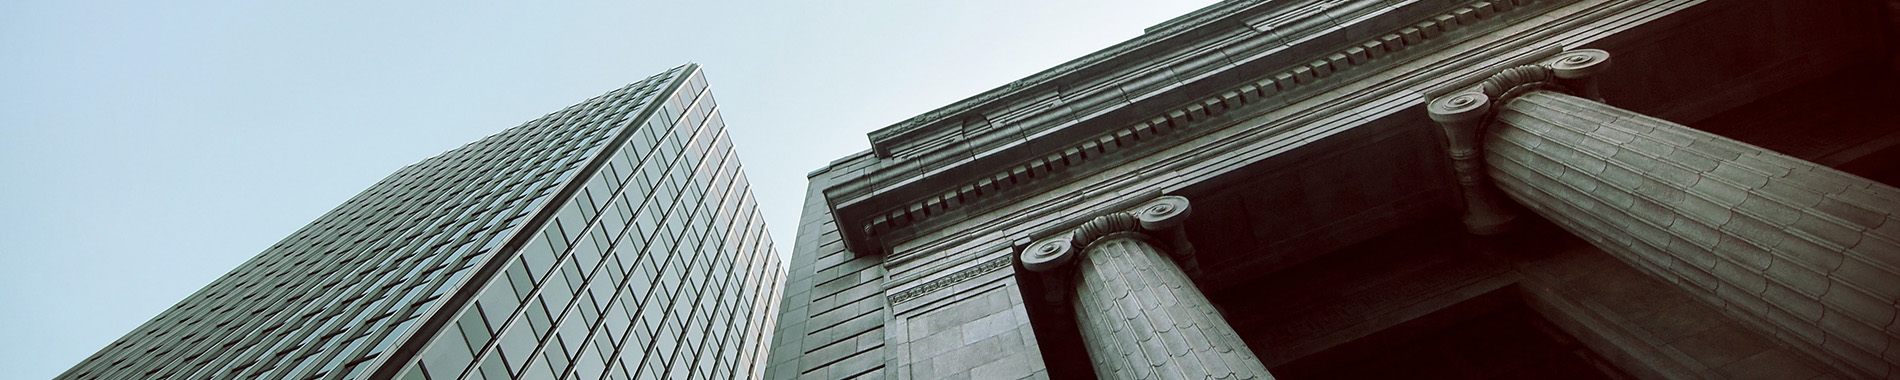 Financial building columns